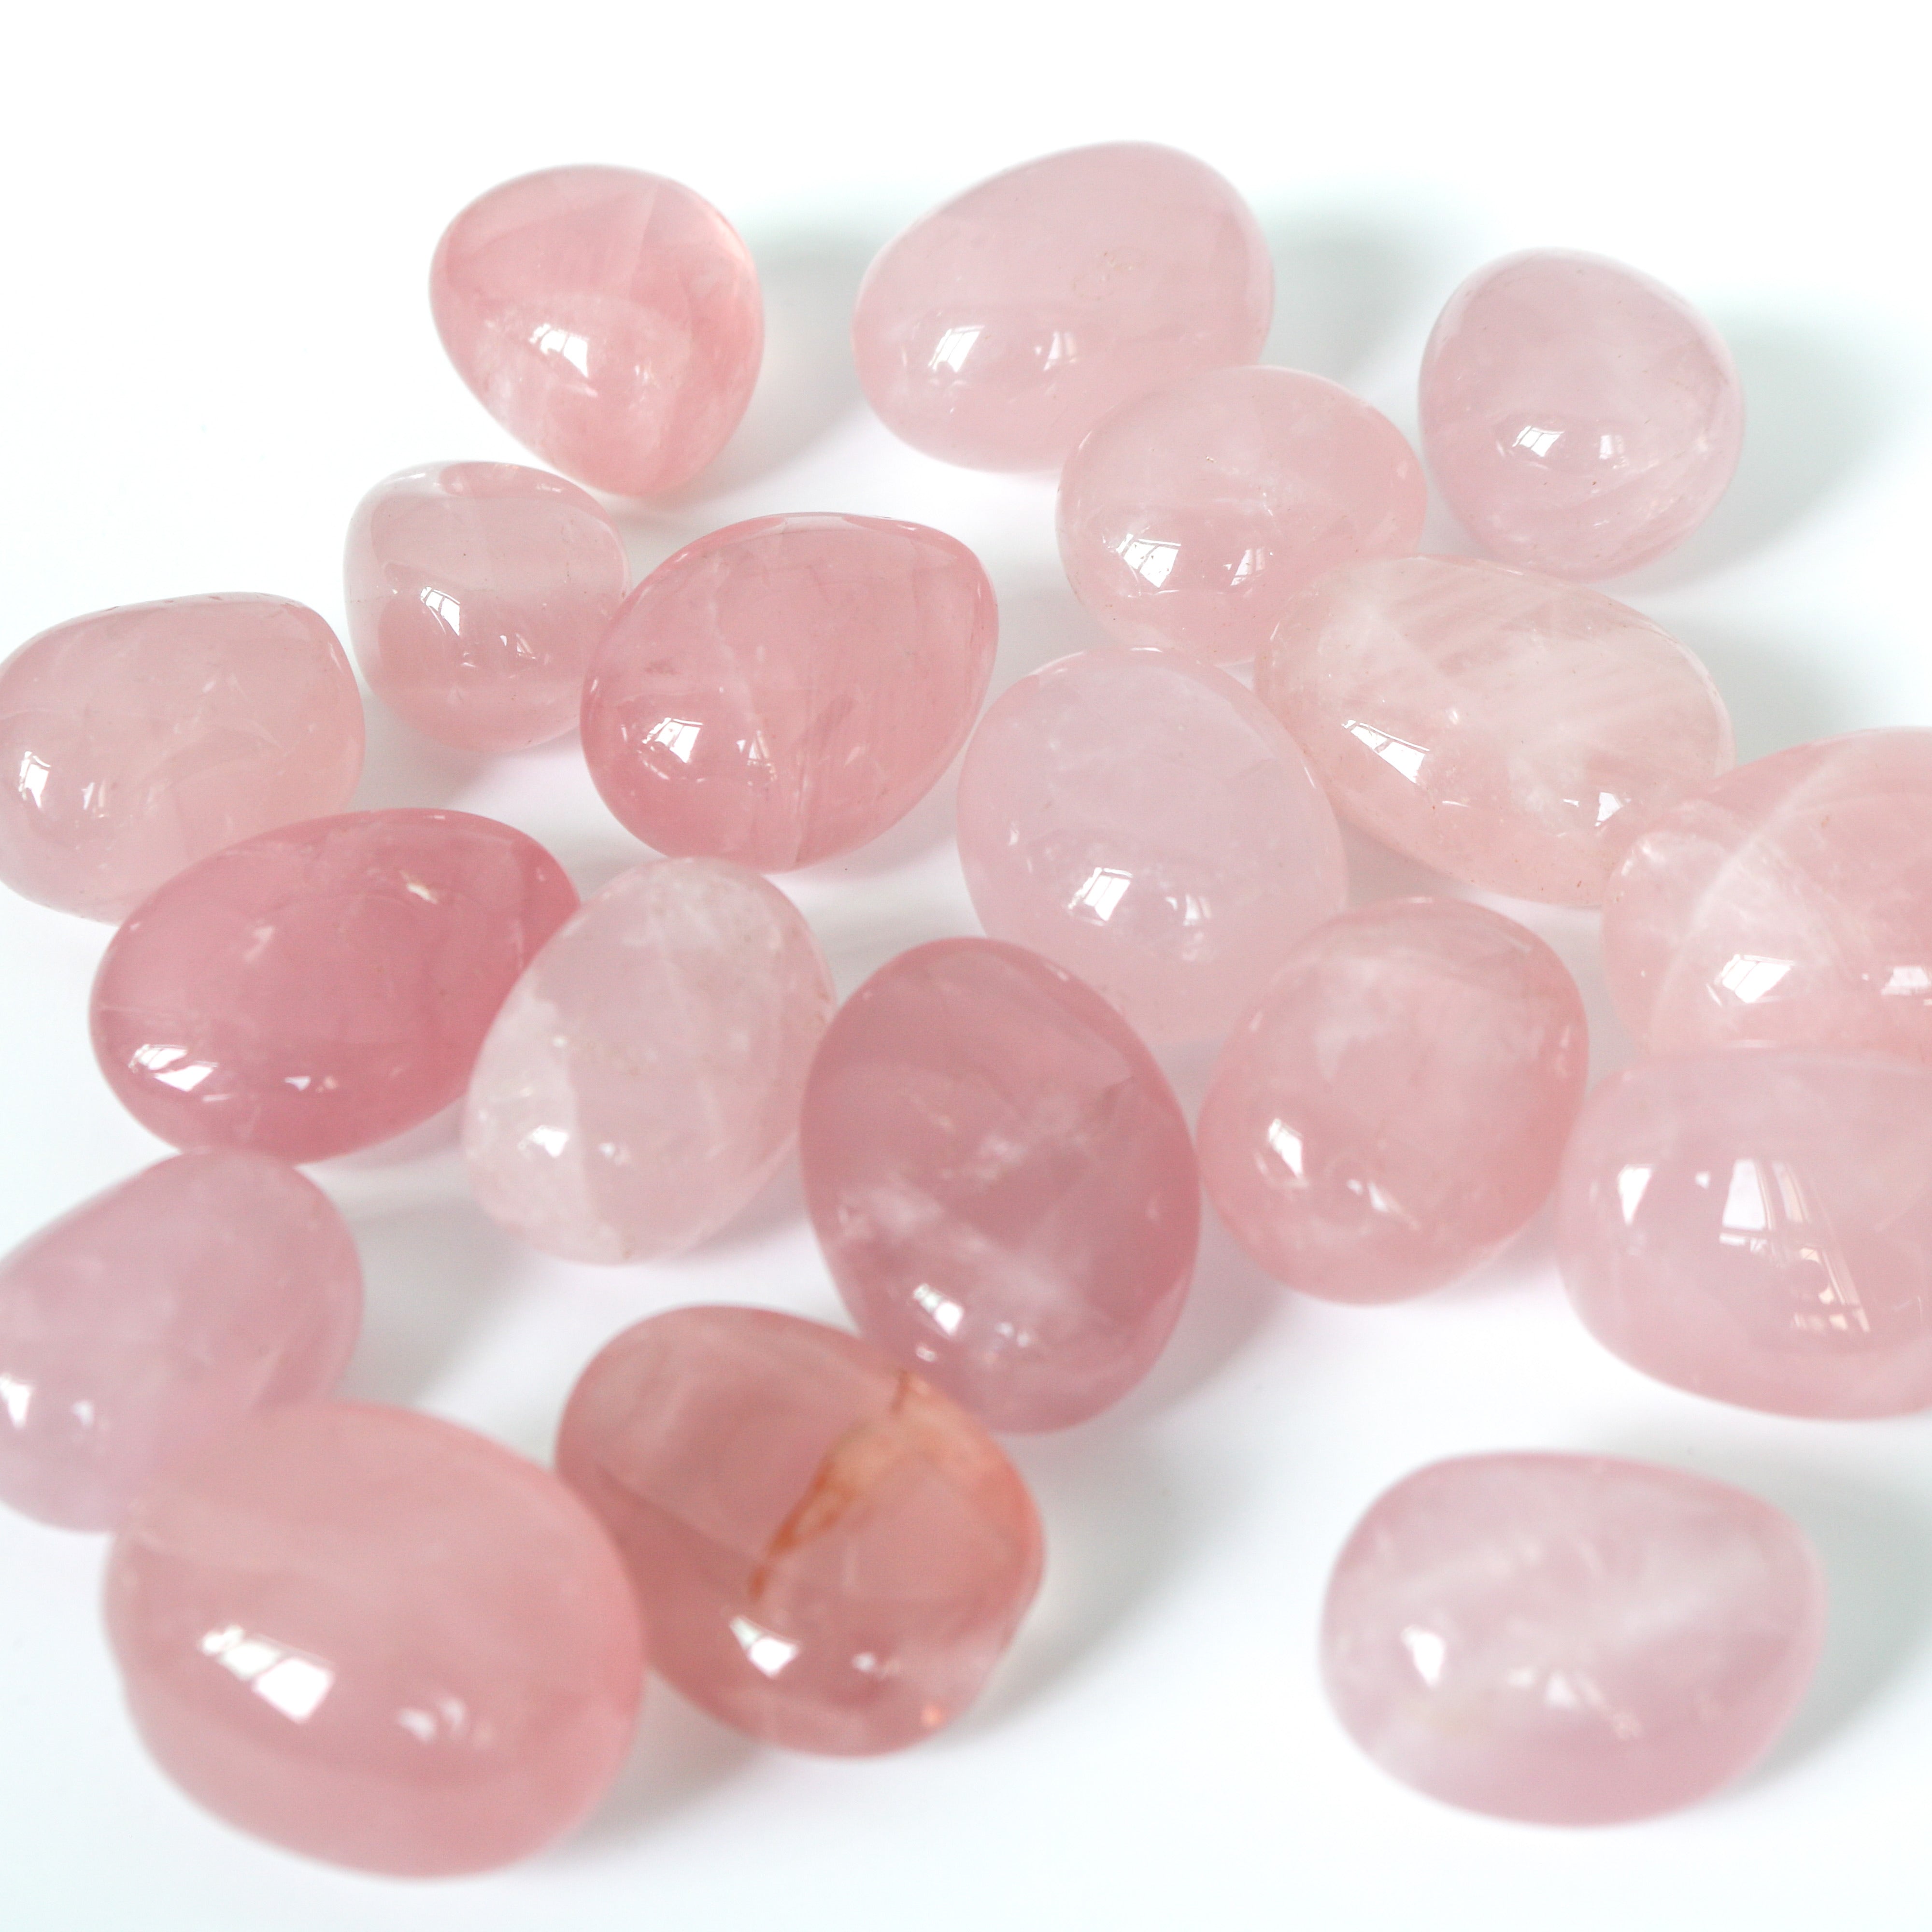 Rose Quartz Tumbled Crystals